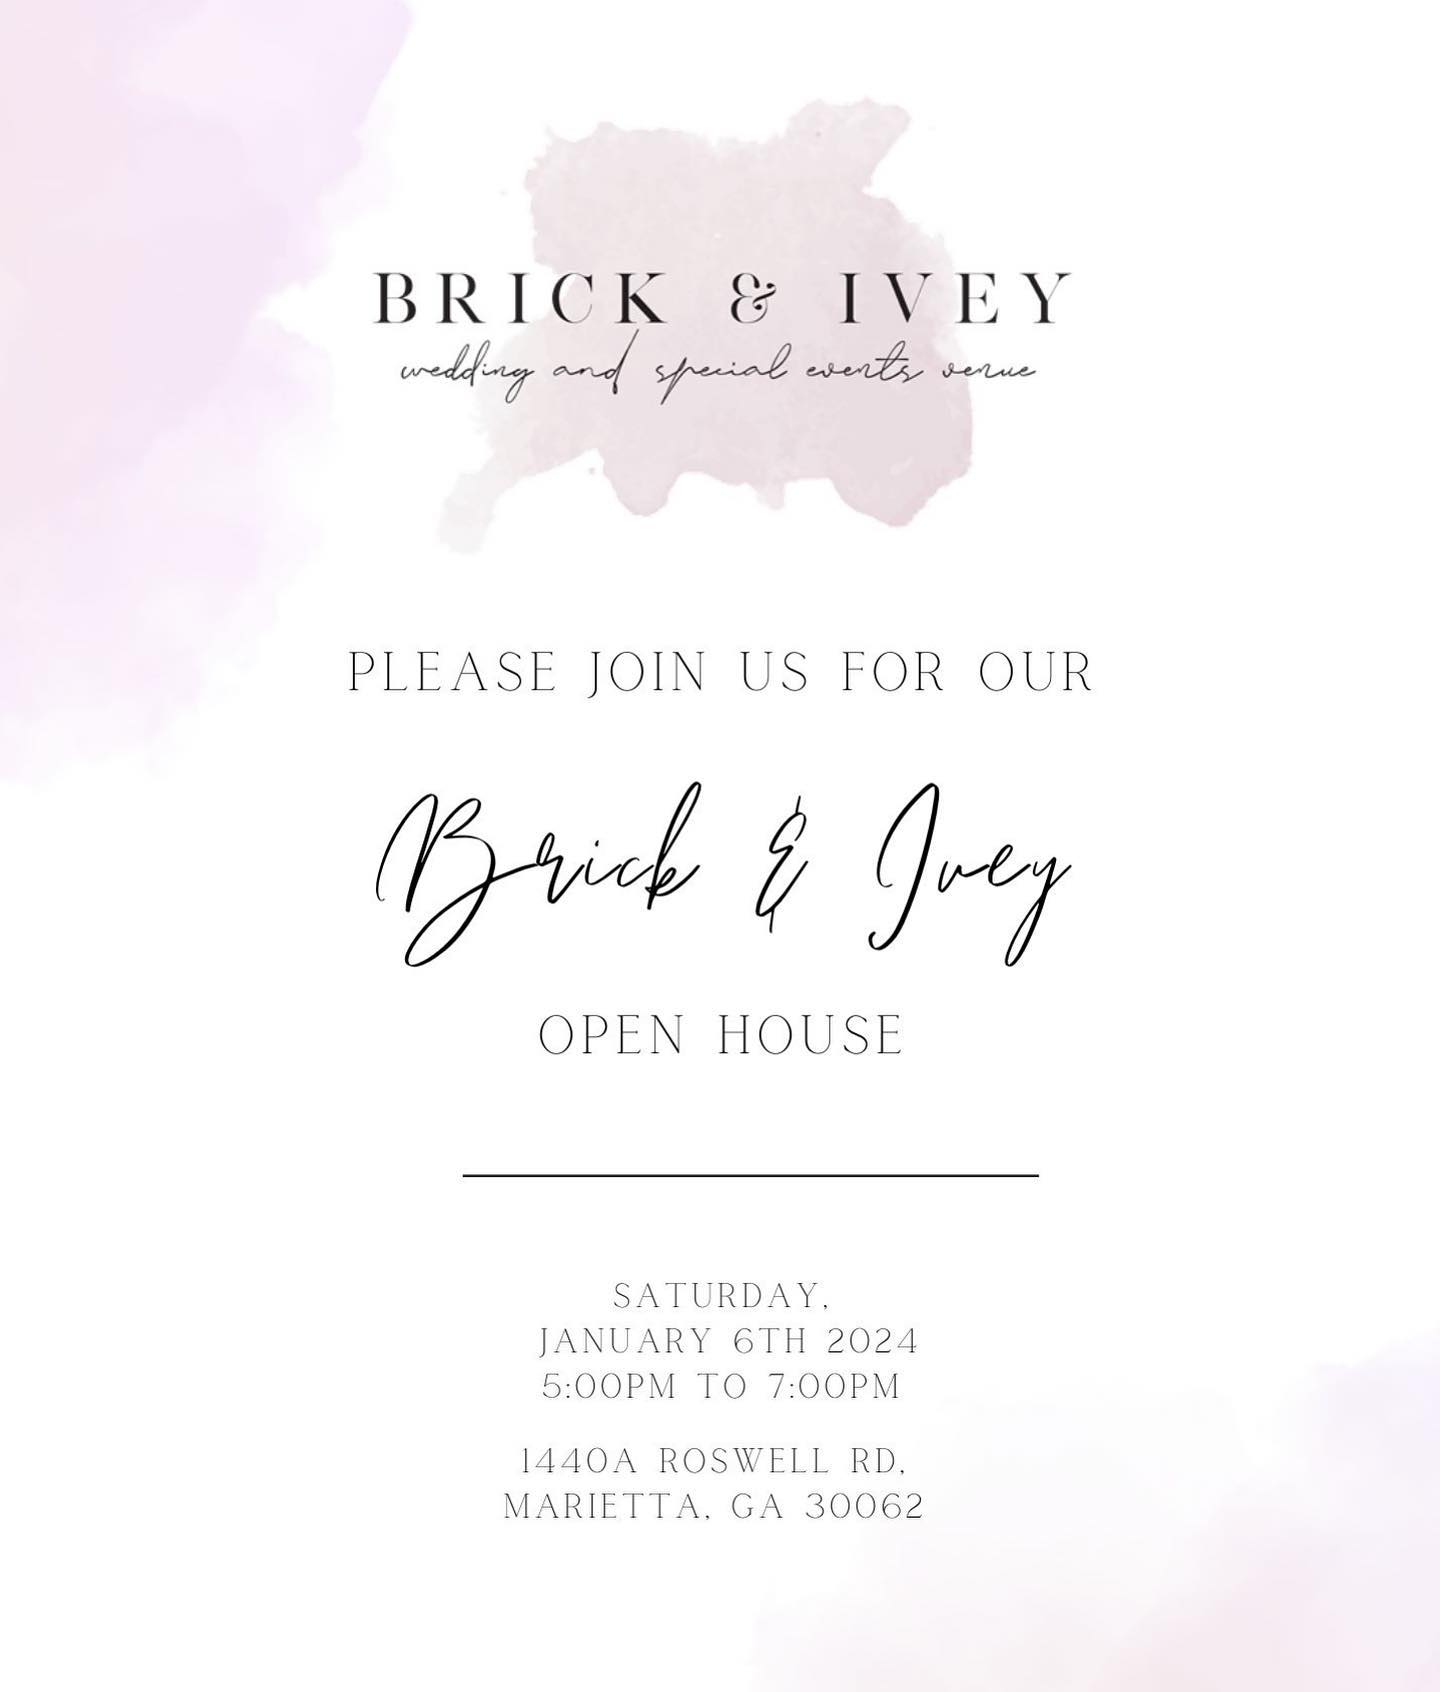 Brick & Ivey Open House - January 2024